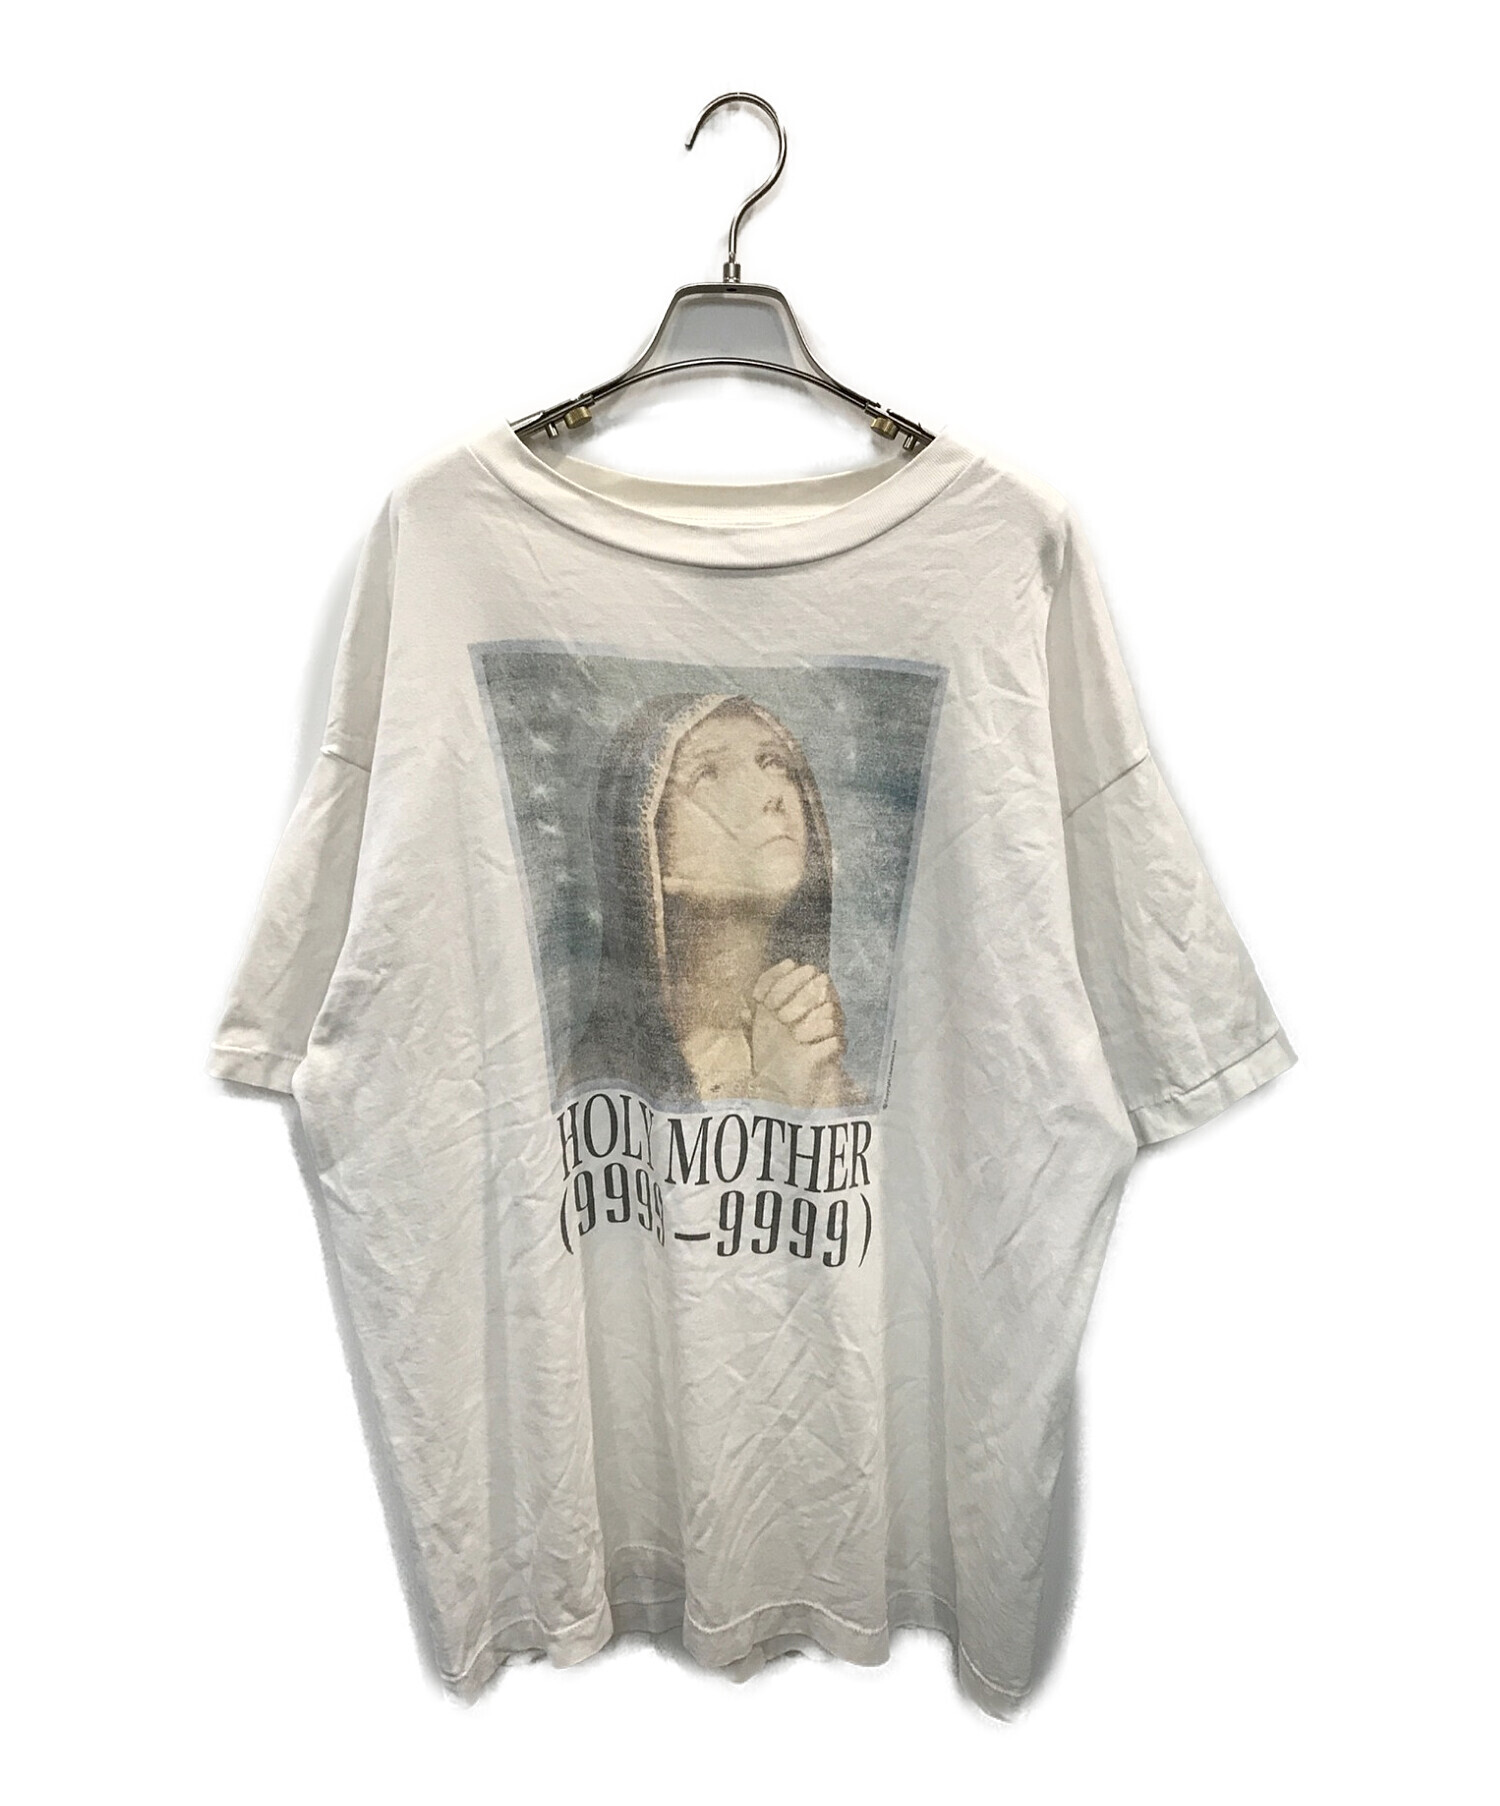 SAINT MICHEL HOLY MOTHER Tシャツ